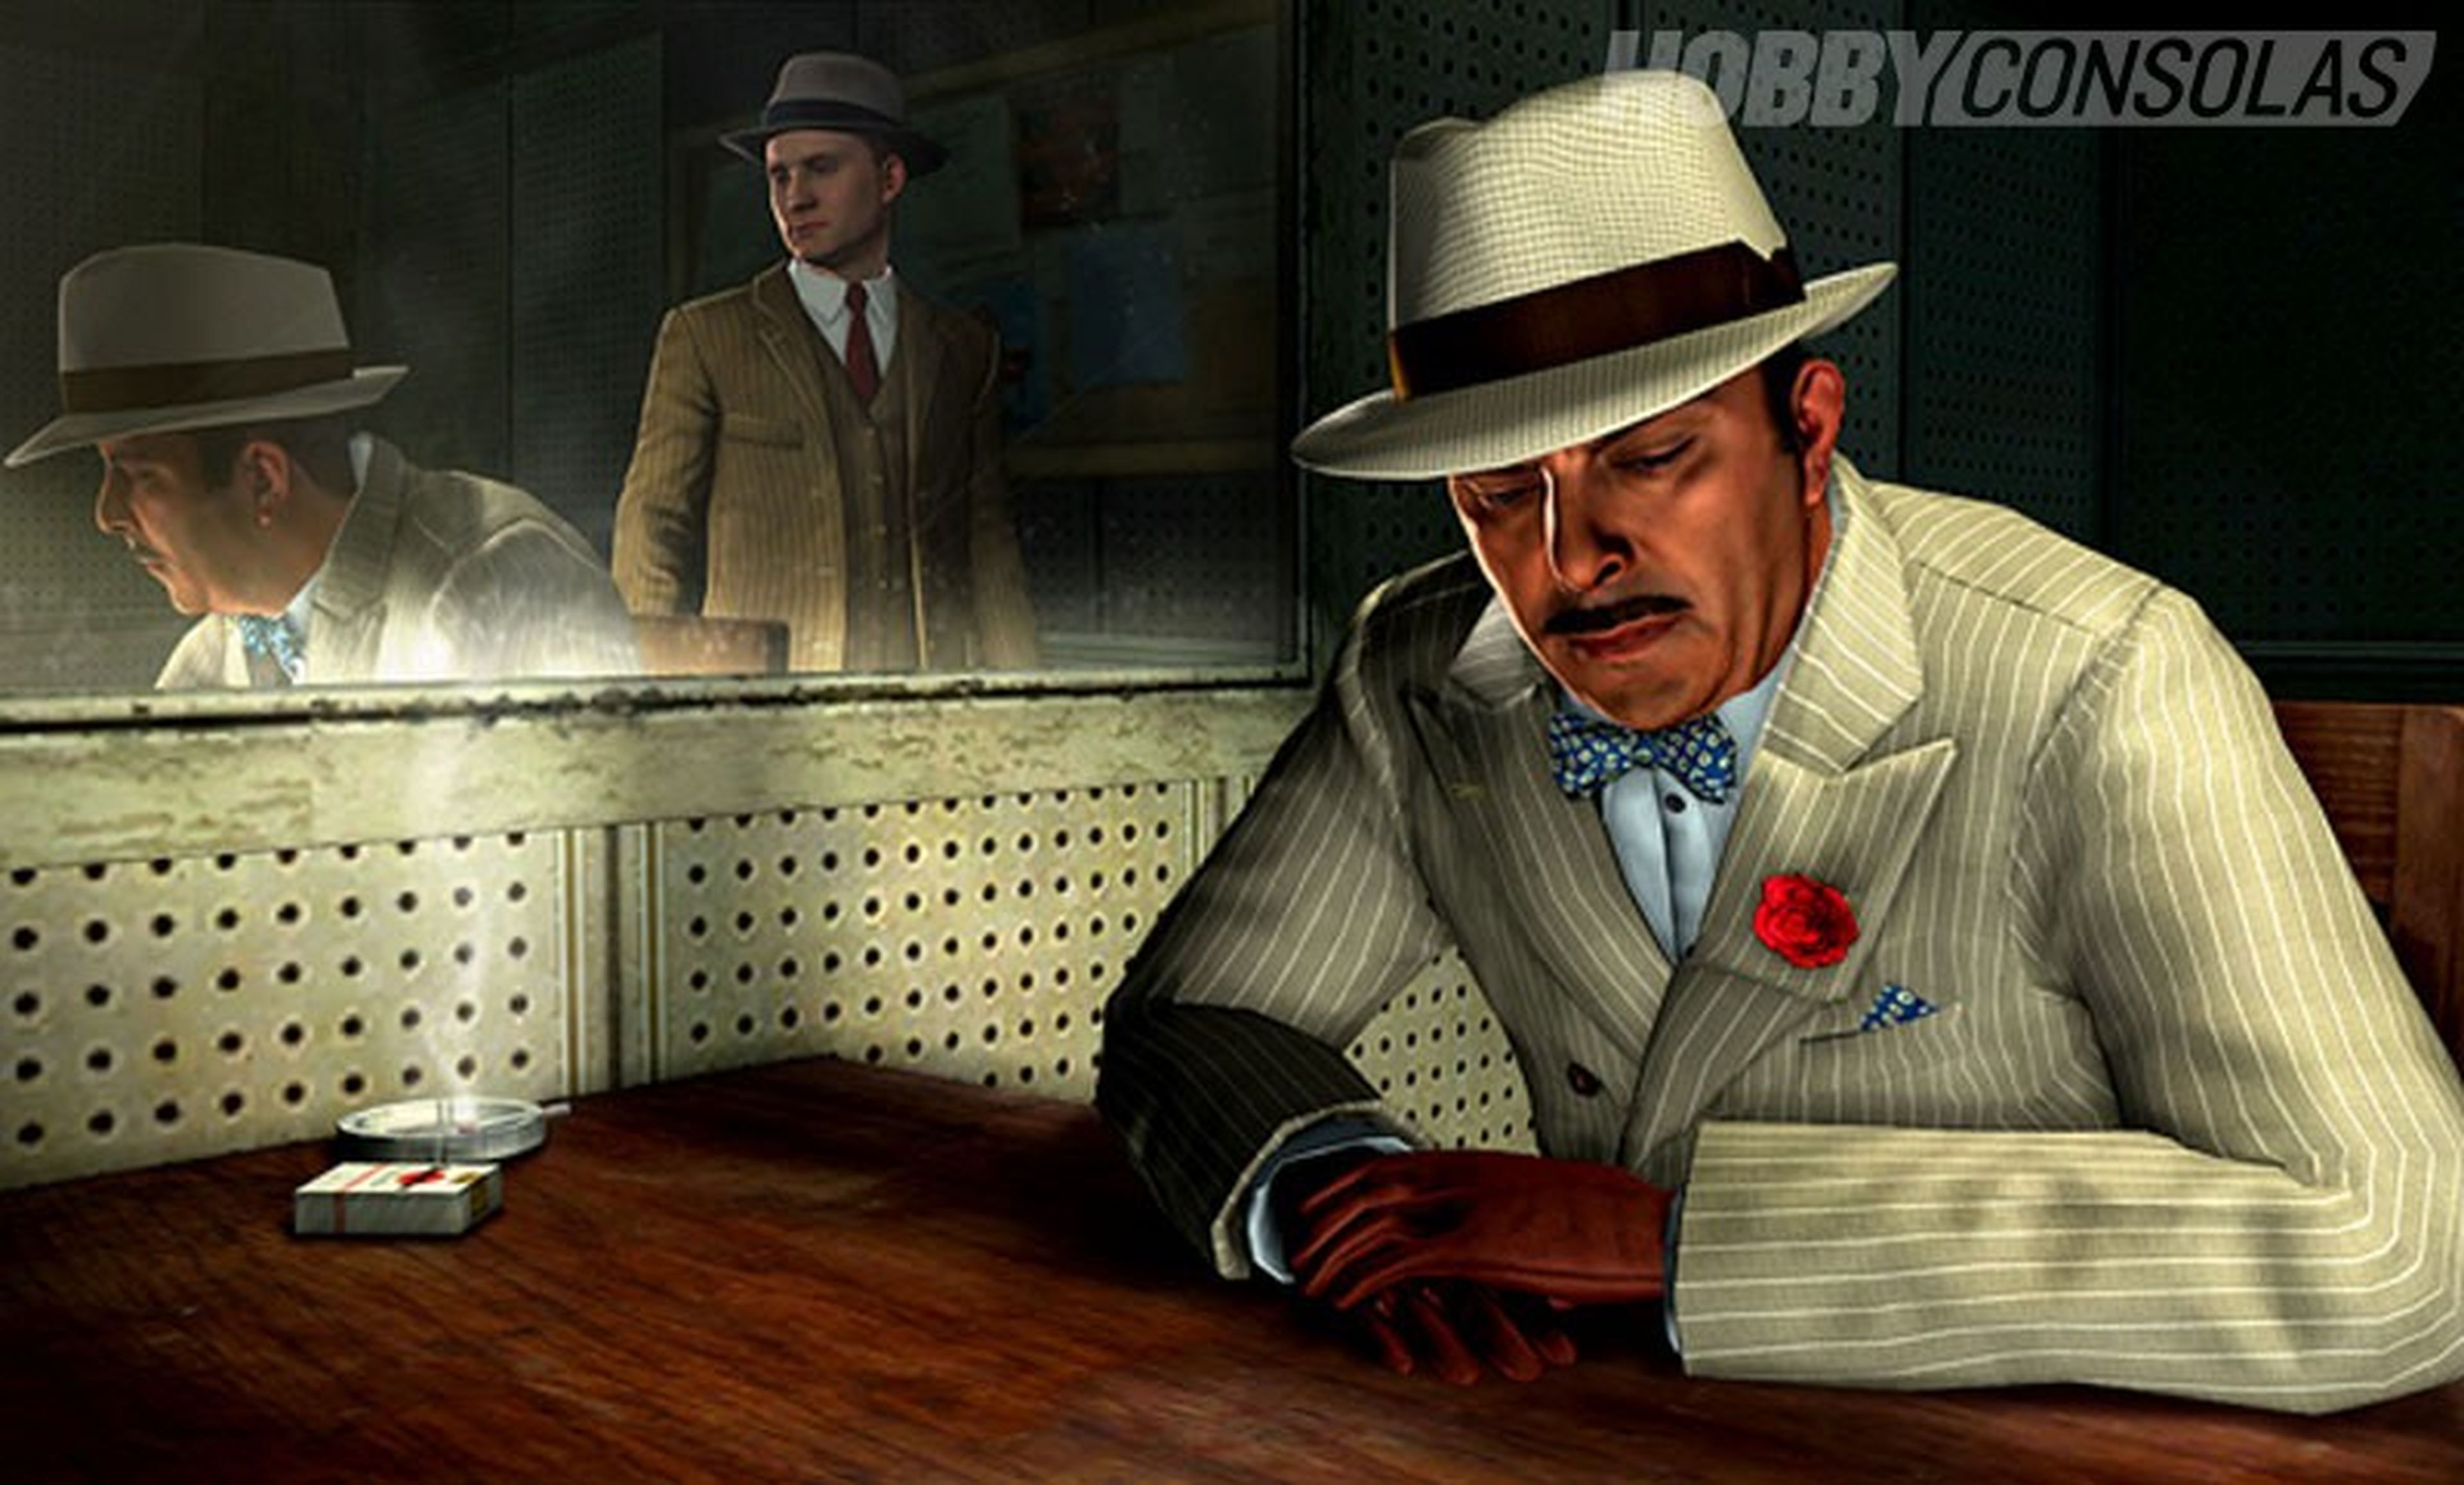 Rockstar publicará relatos de L.A. Noire